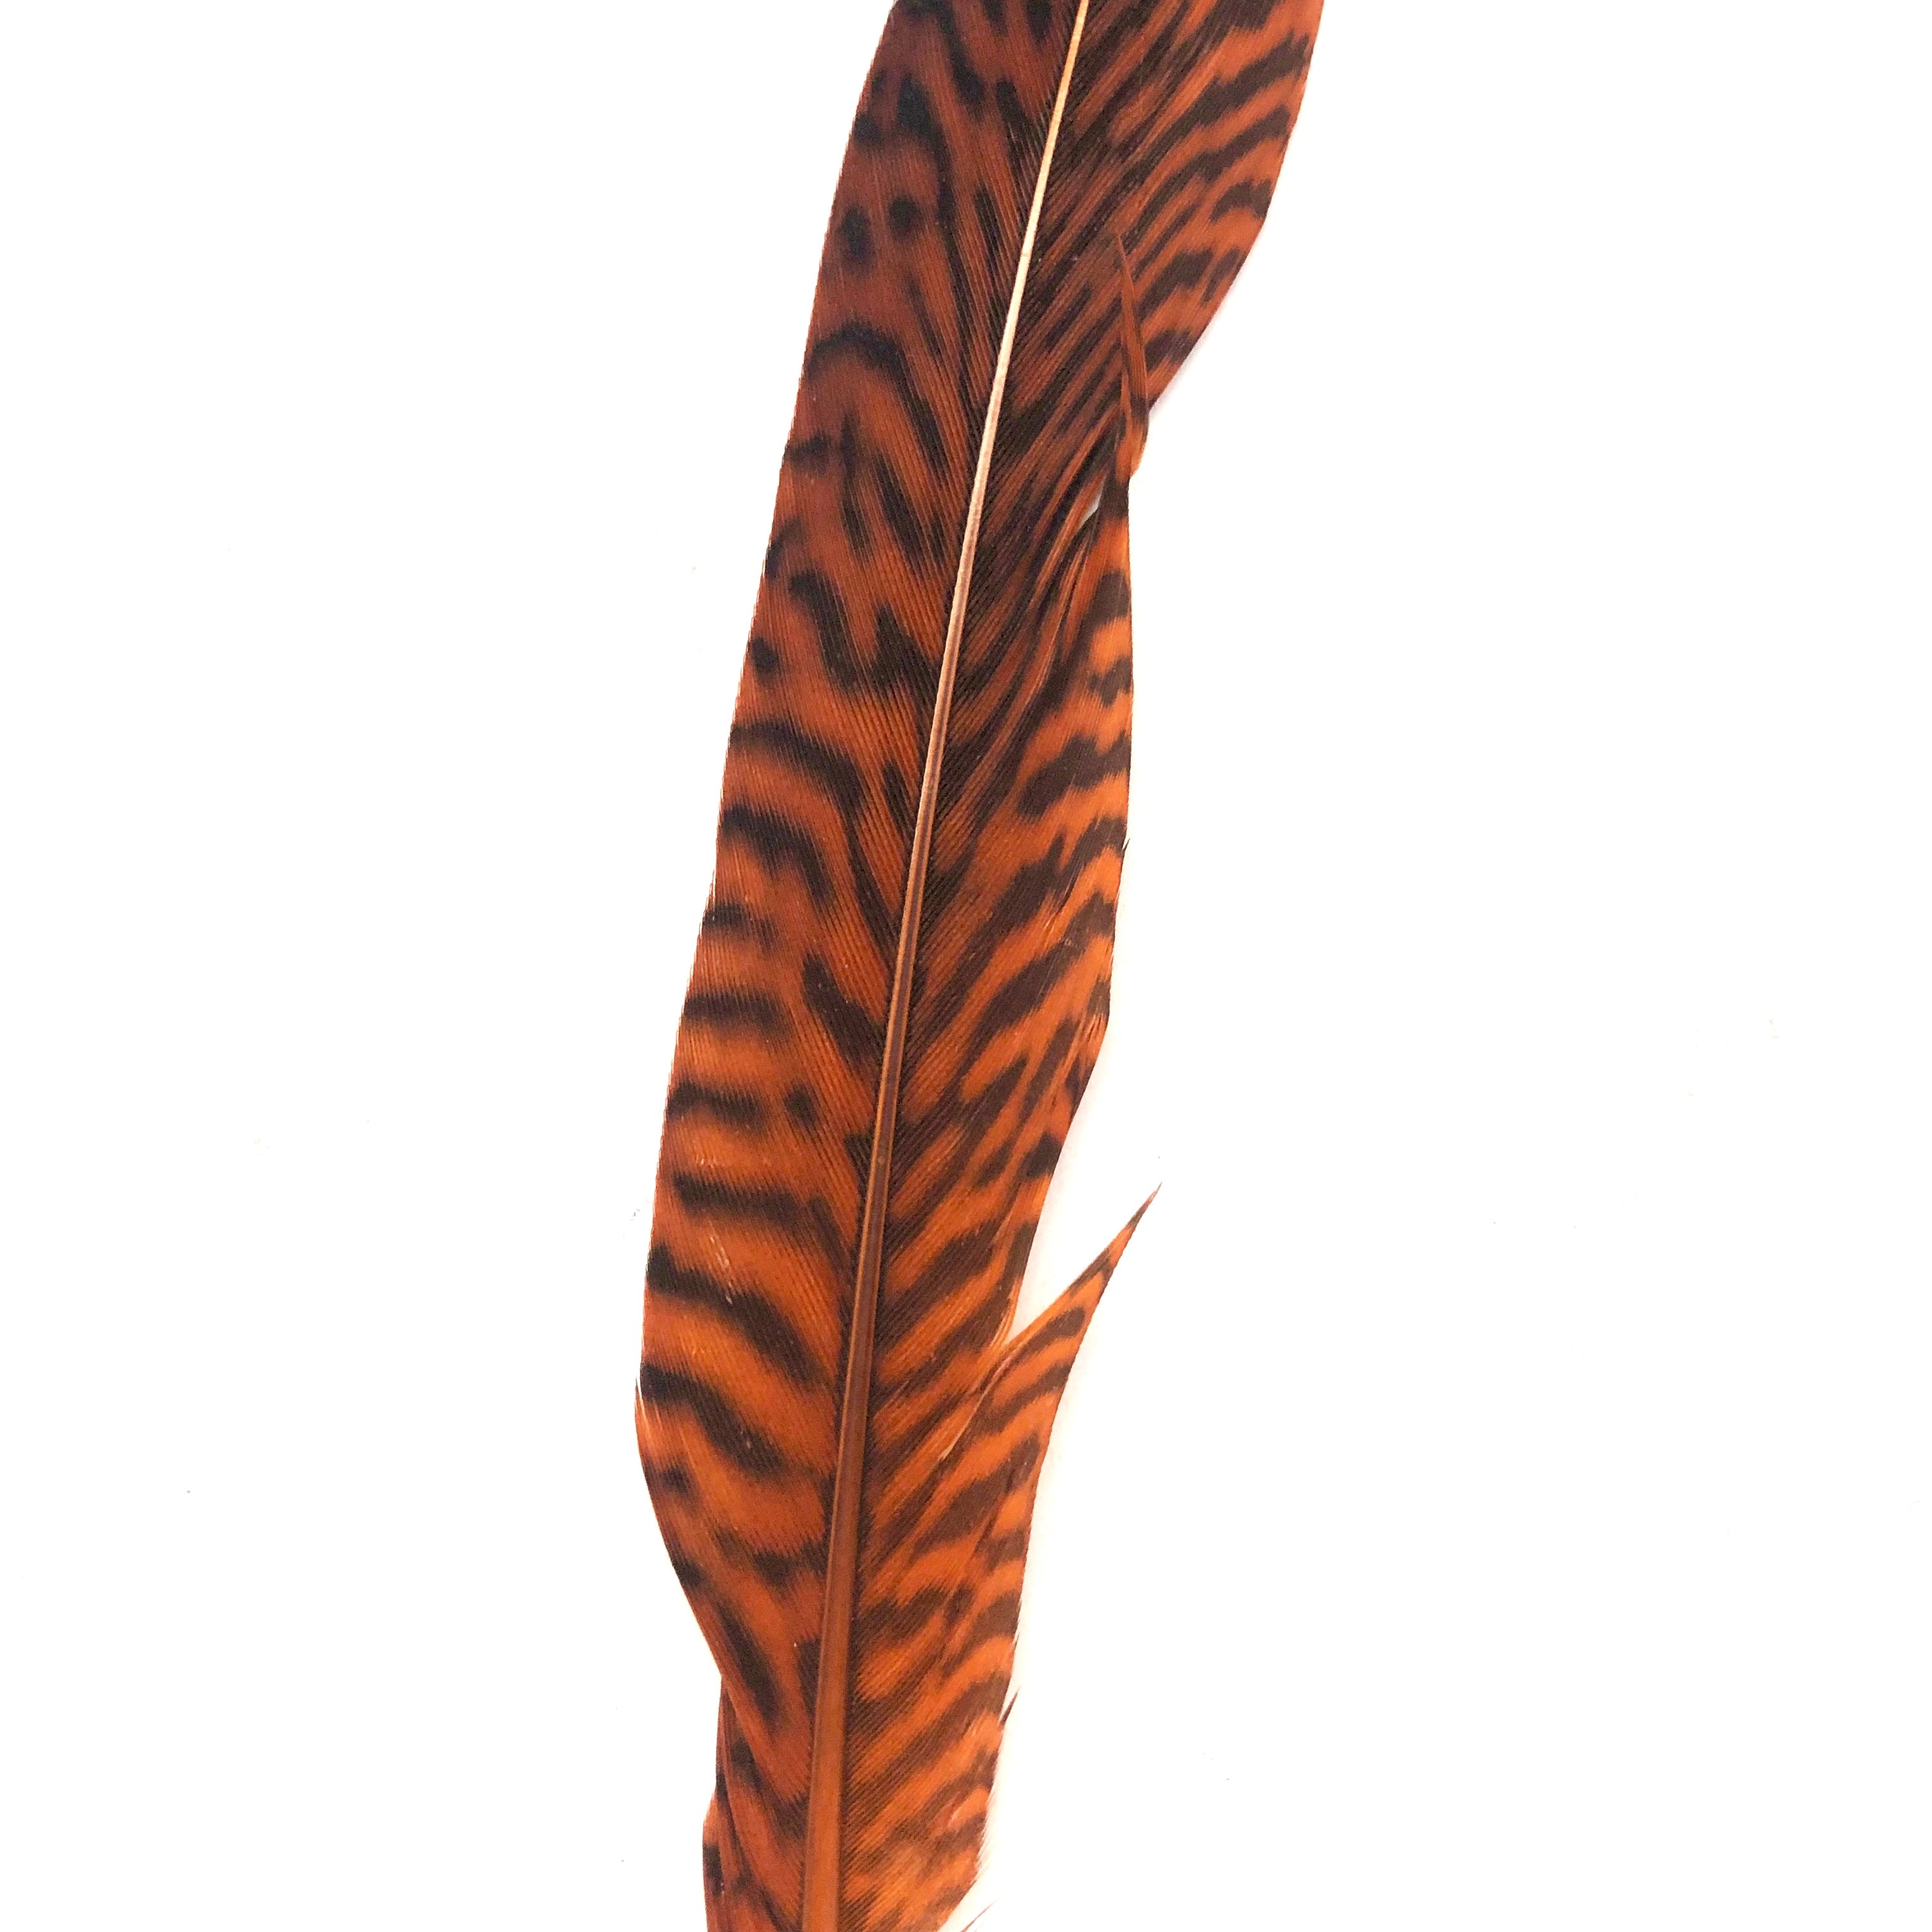 6" to 10" Golden Pheasant Side Tail Feather x 10 pcs - Orange